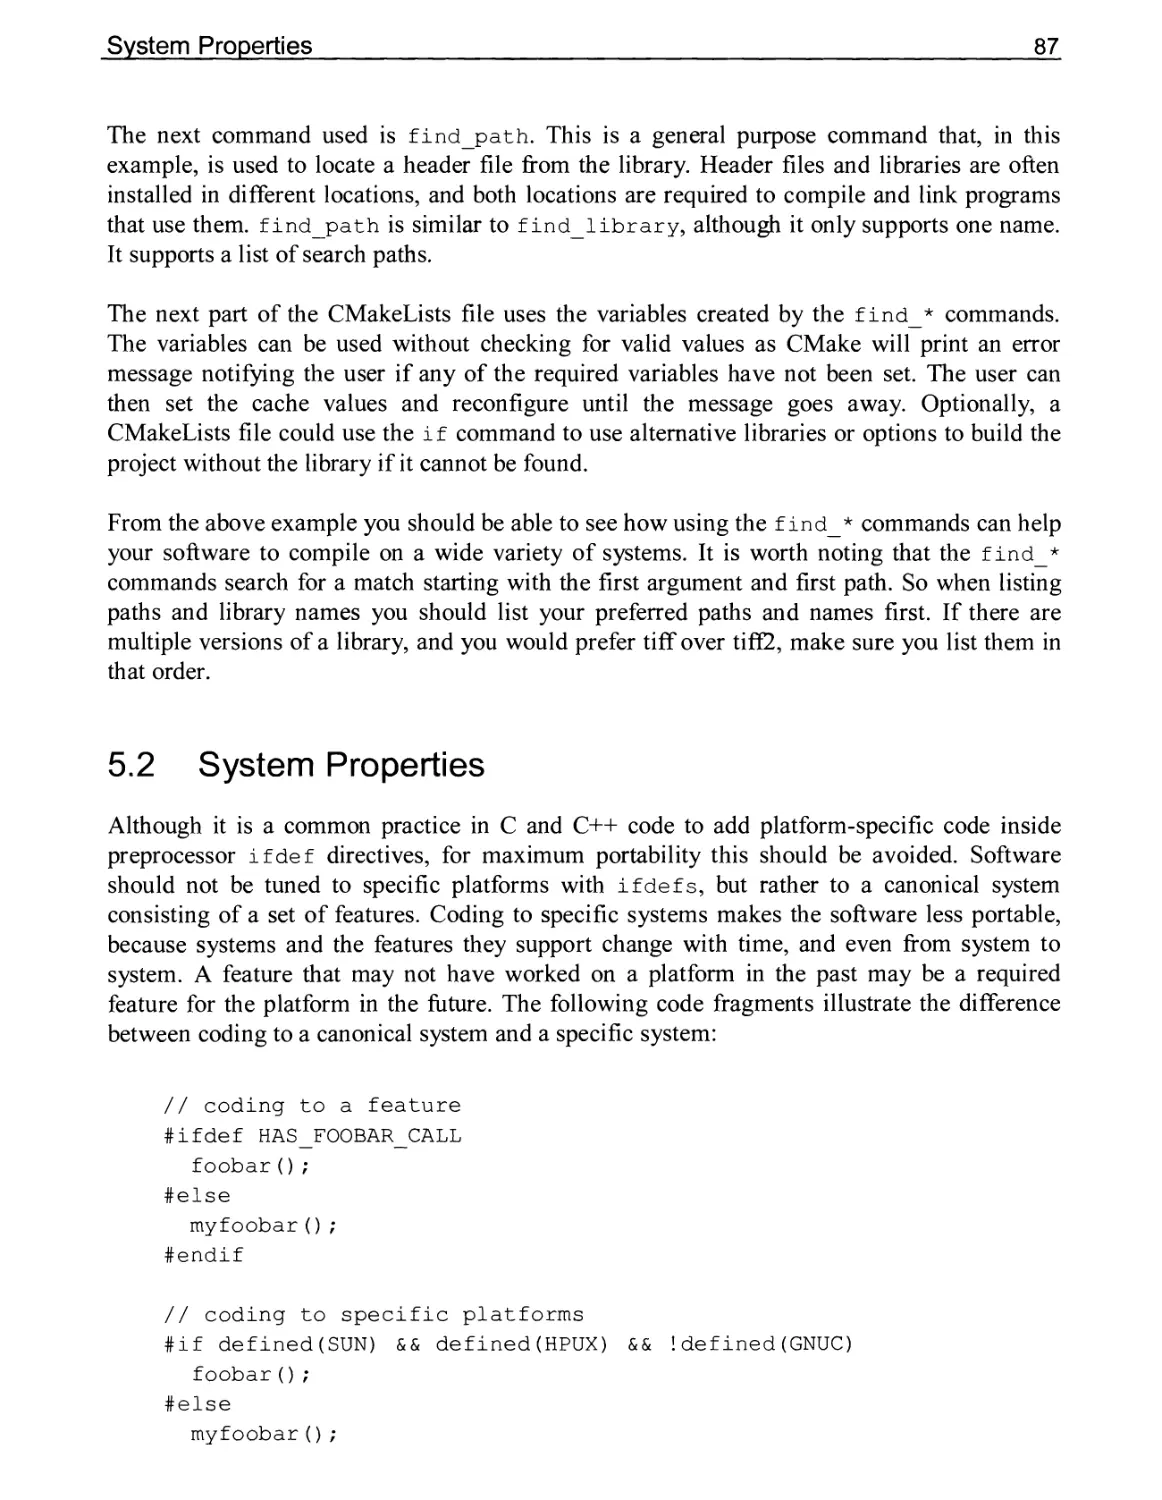 5.2 System Properties